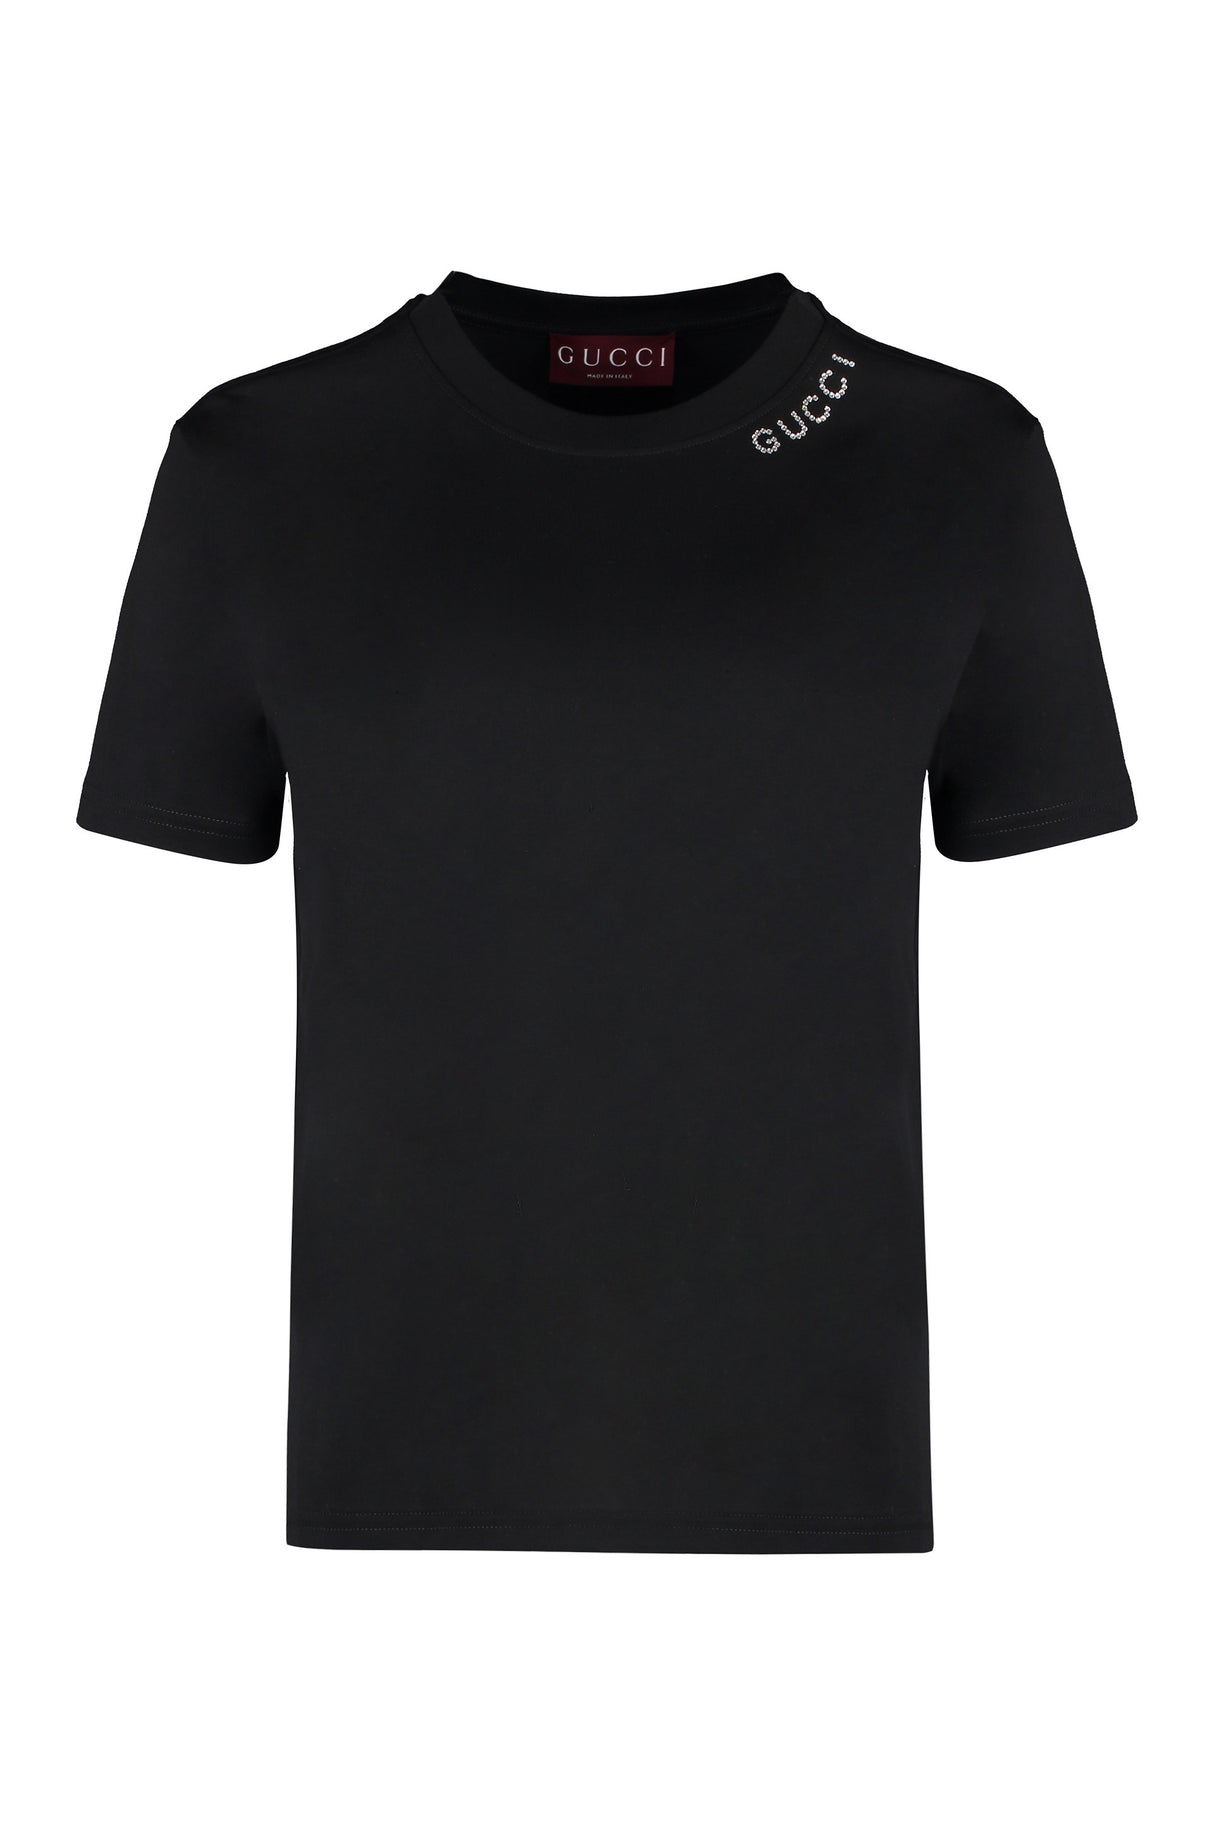 GUCCI Black Cotton Crew-Neck T-Shirt for Women